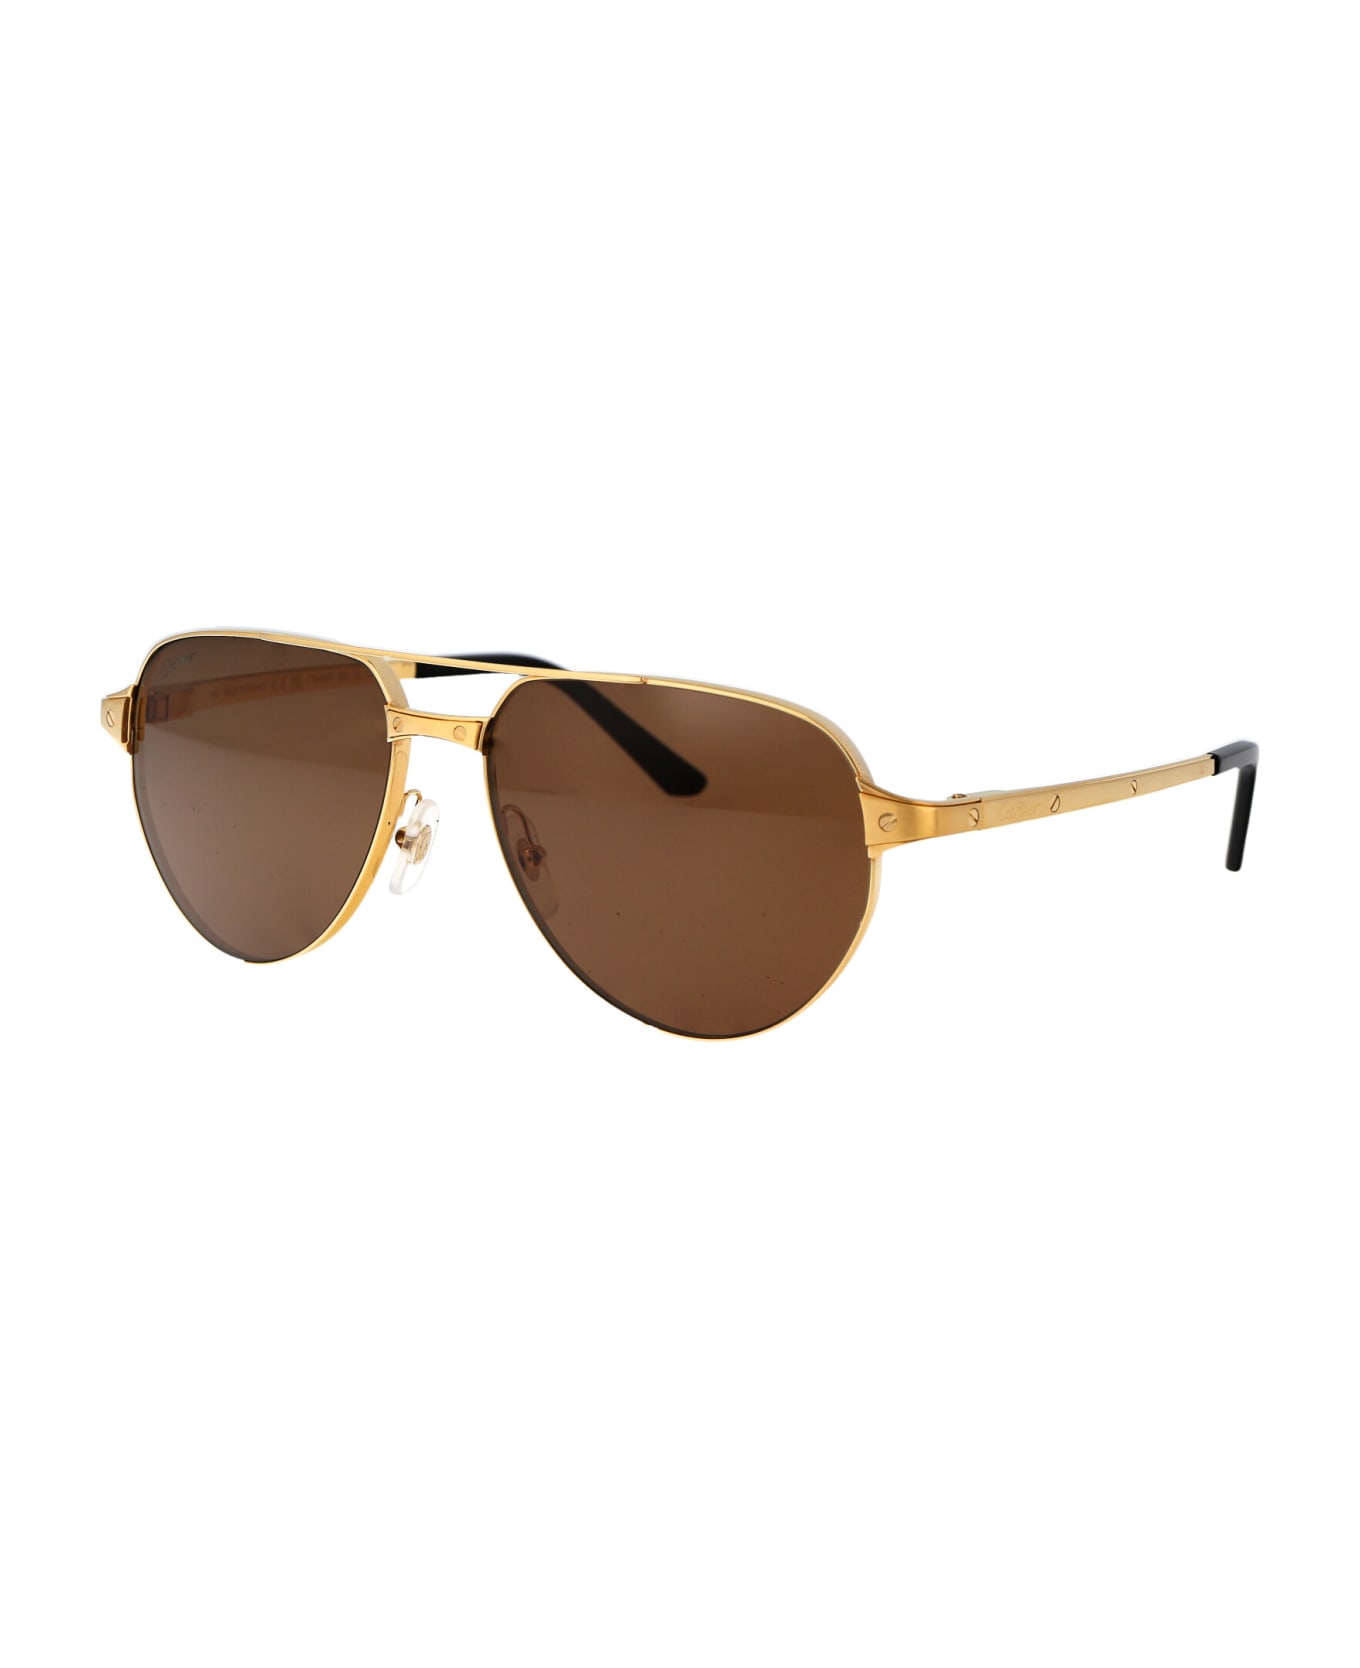 Cartier Eyewear Ct0425s Sunglasses - 003 GOLD GOLD BROWN サングラス